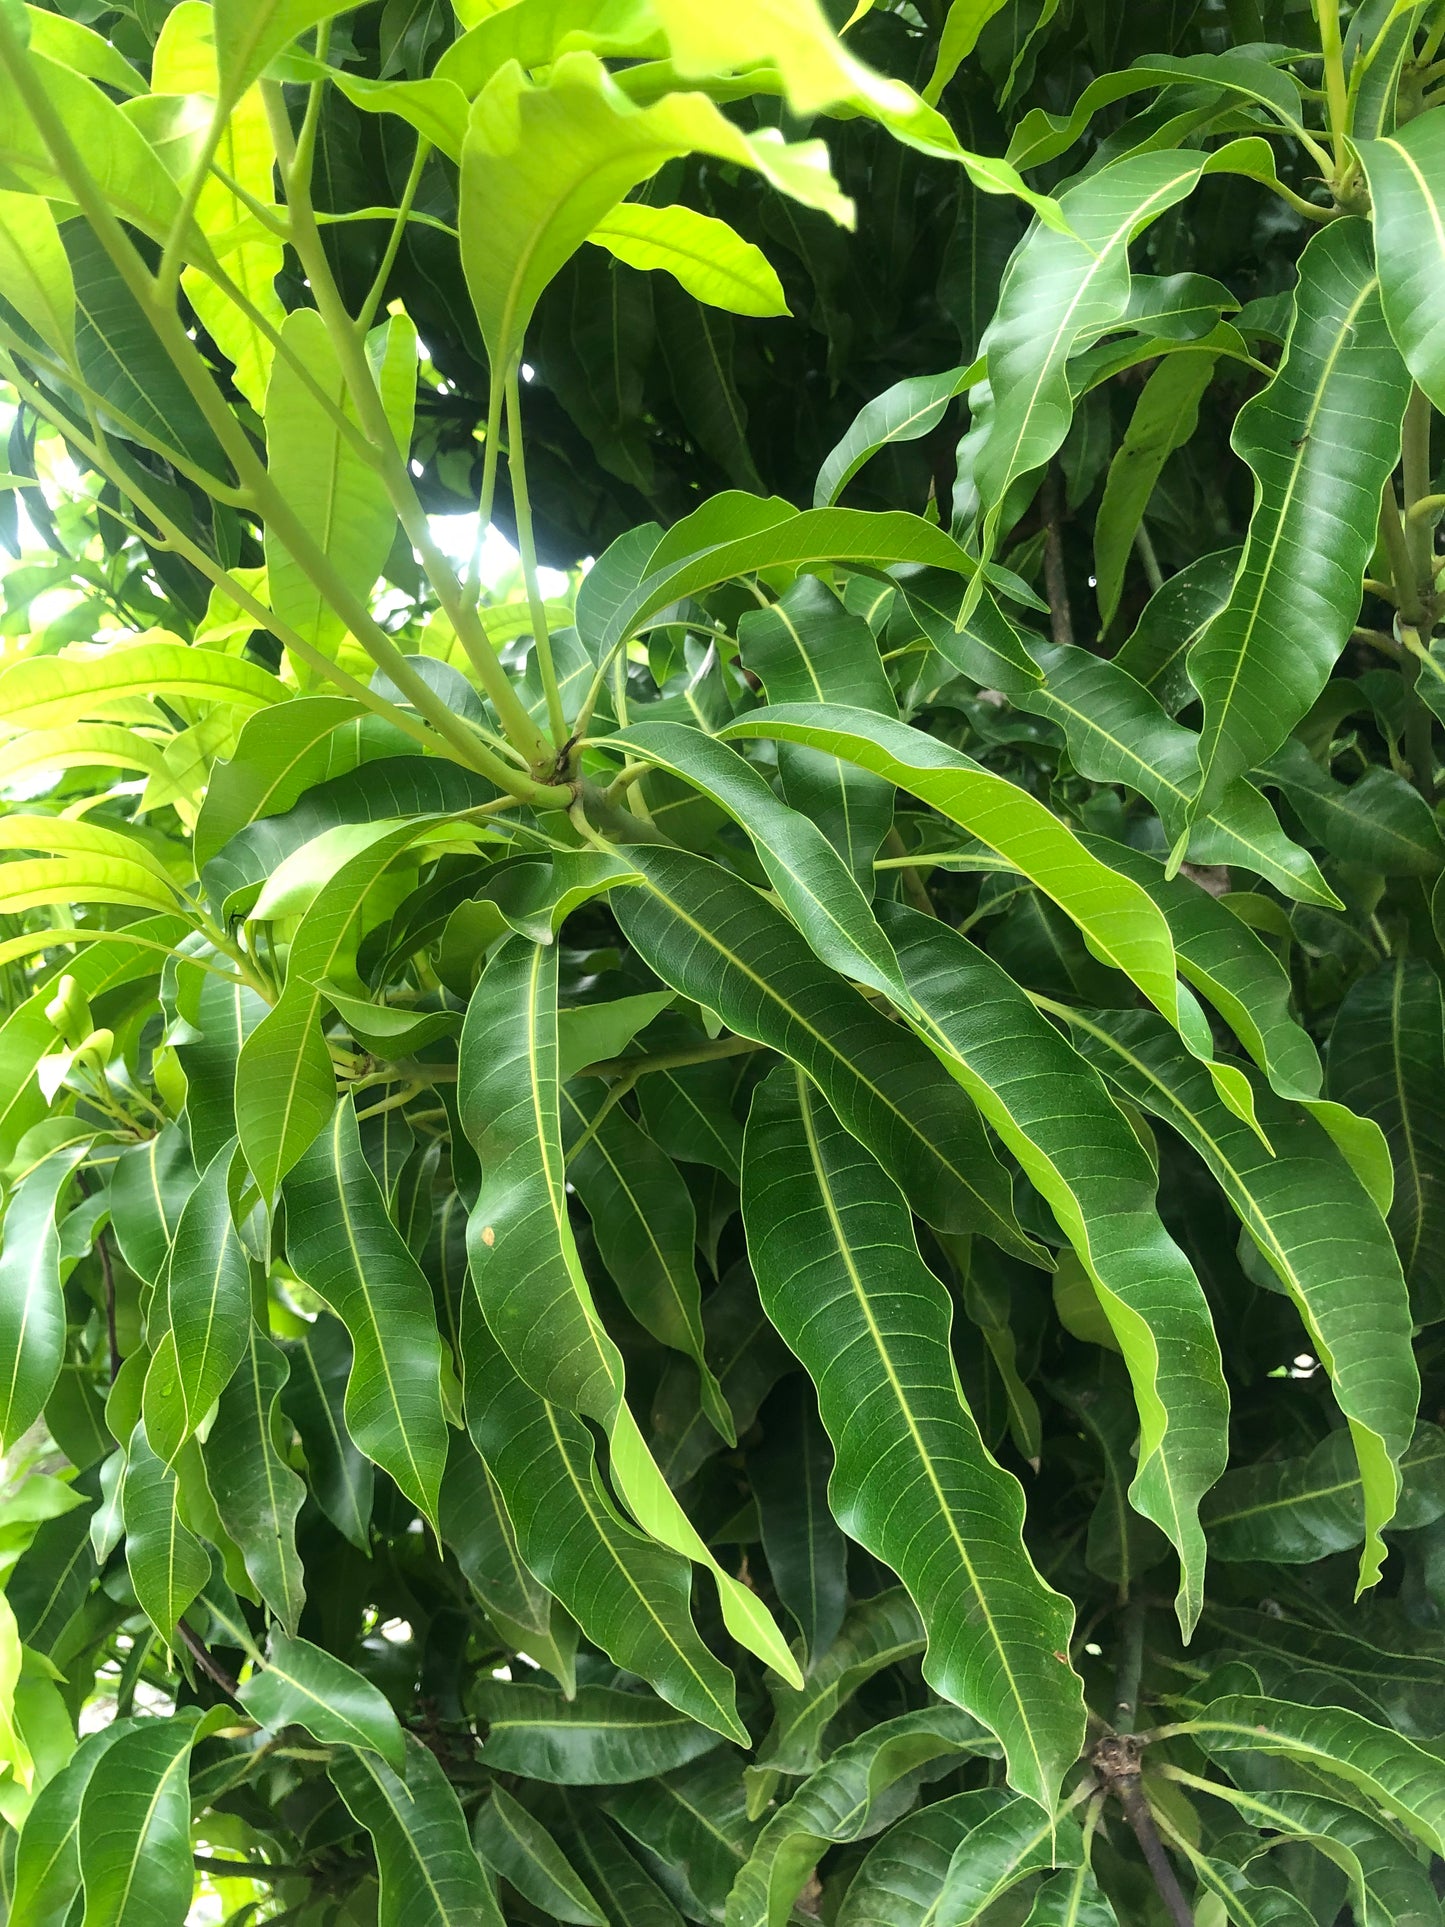 Mango leaves 1 kg